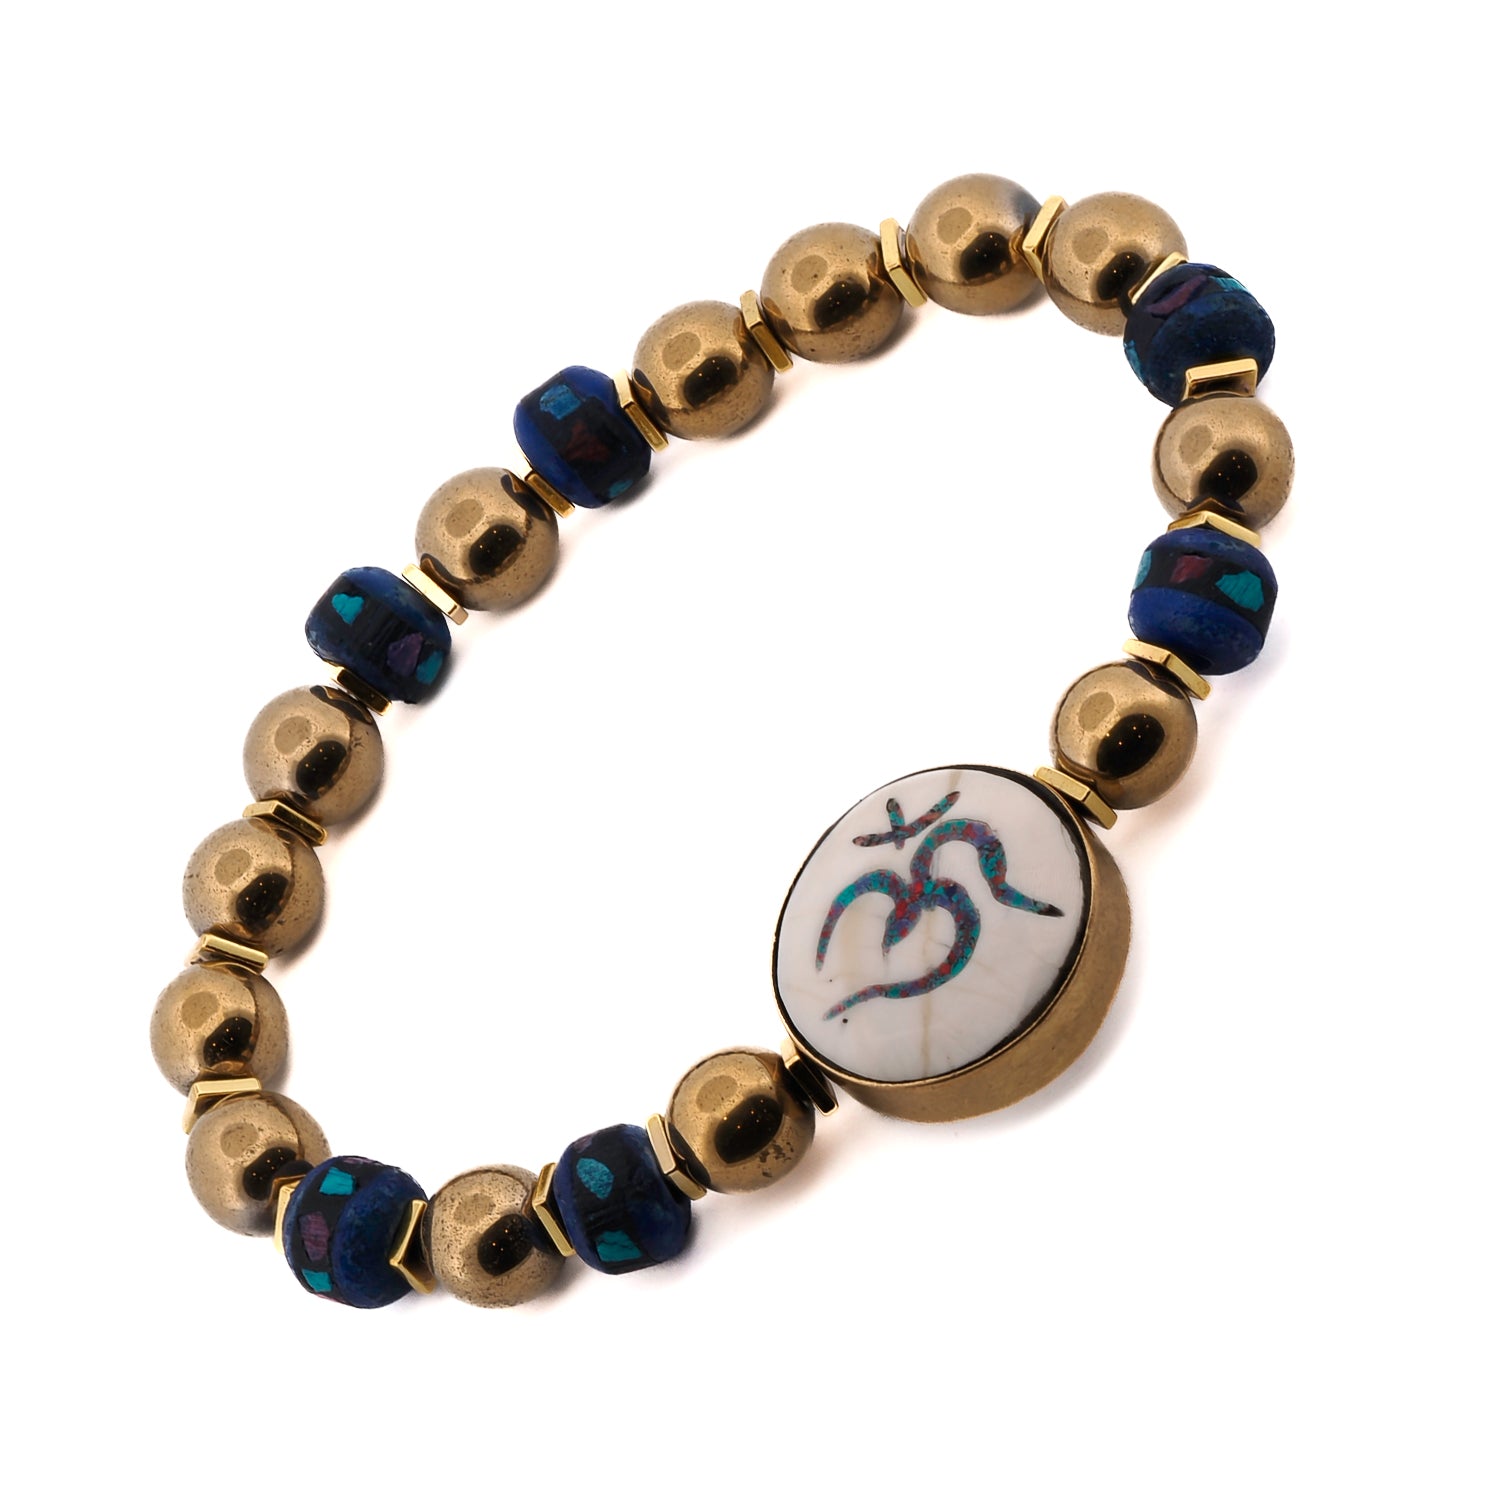 Elegant Om Mantra Bracelet with Gold Hematite and Blue Meditation Beads